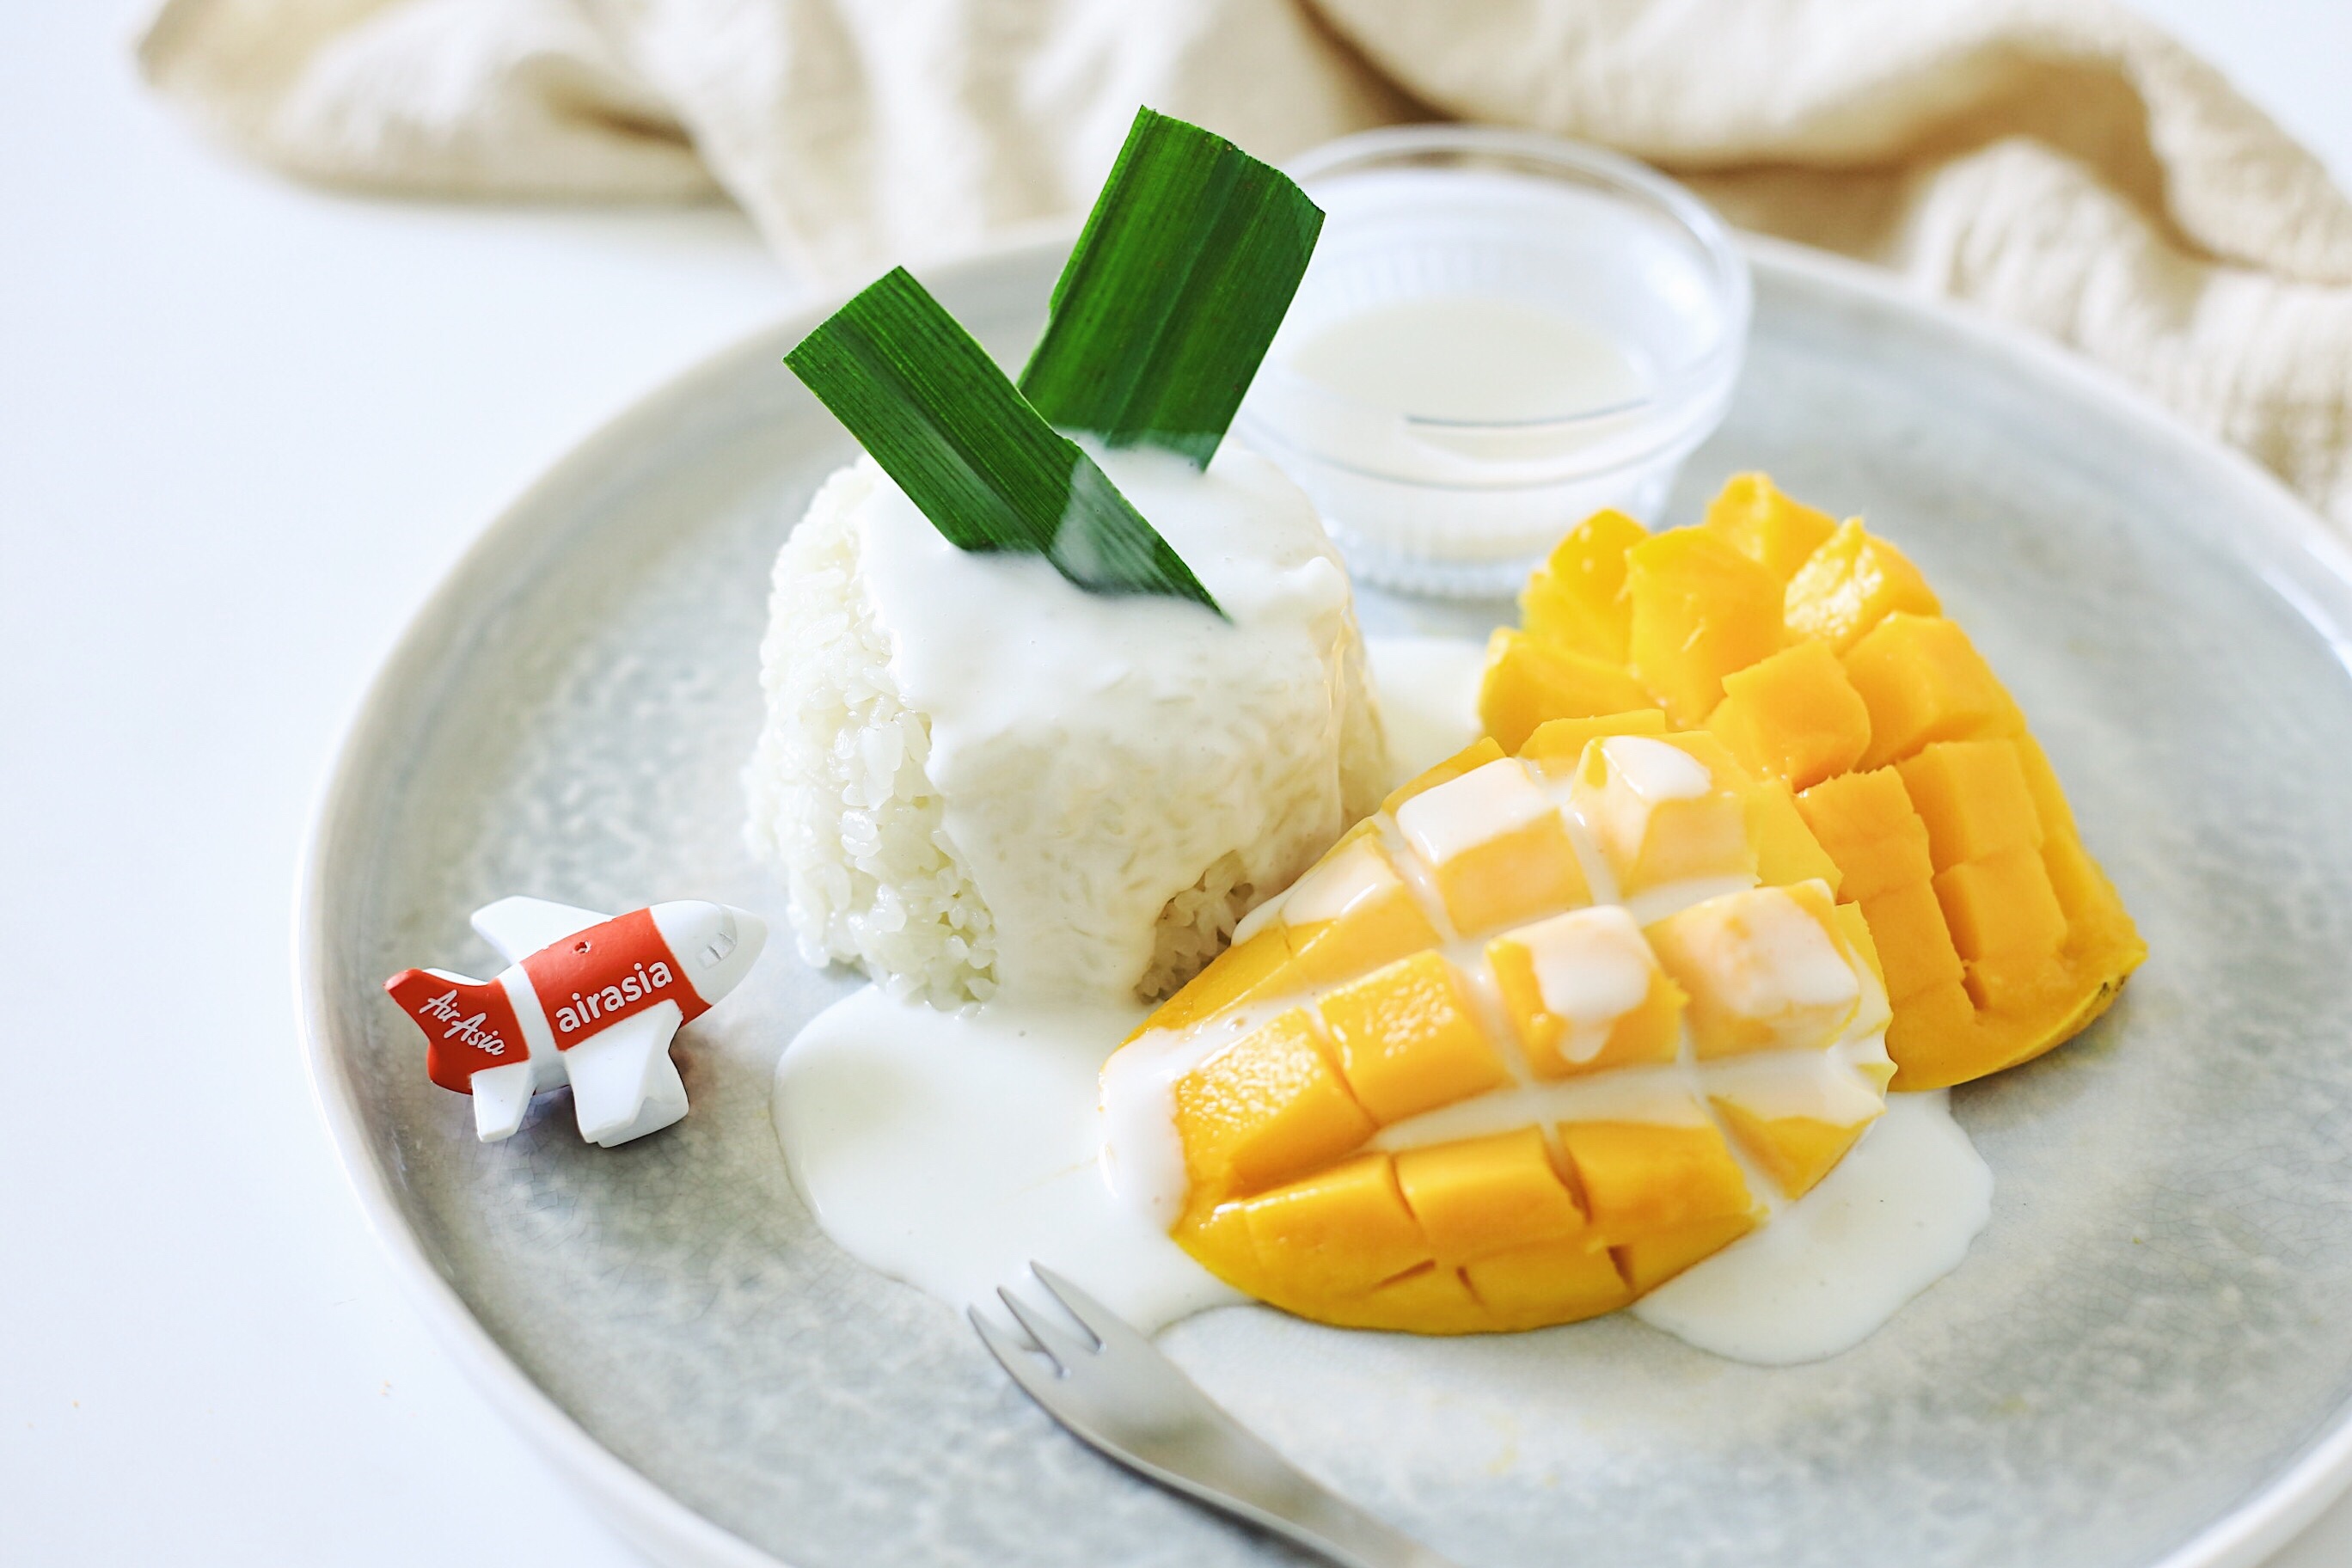 翻滚吧大厨—泰式芒果糯米饭厨<Coconut Sticky Rice with Mango>